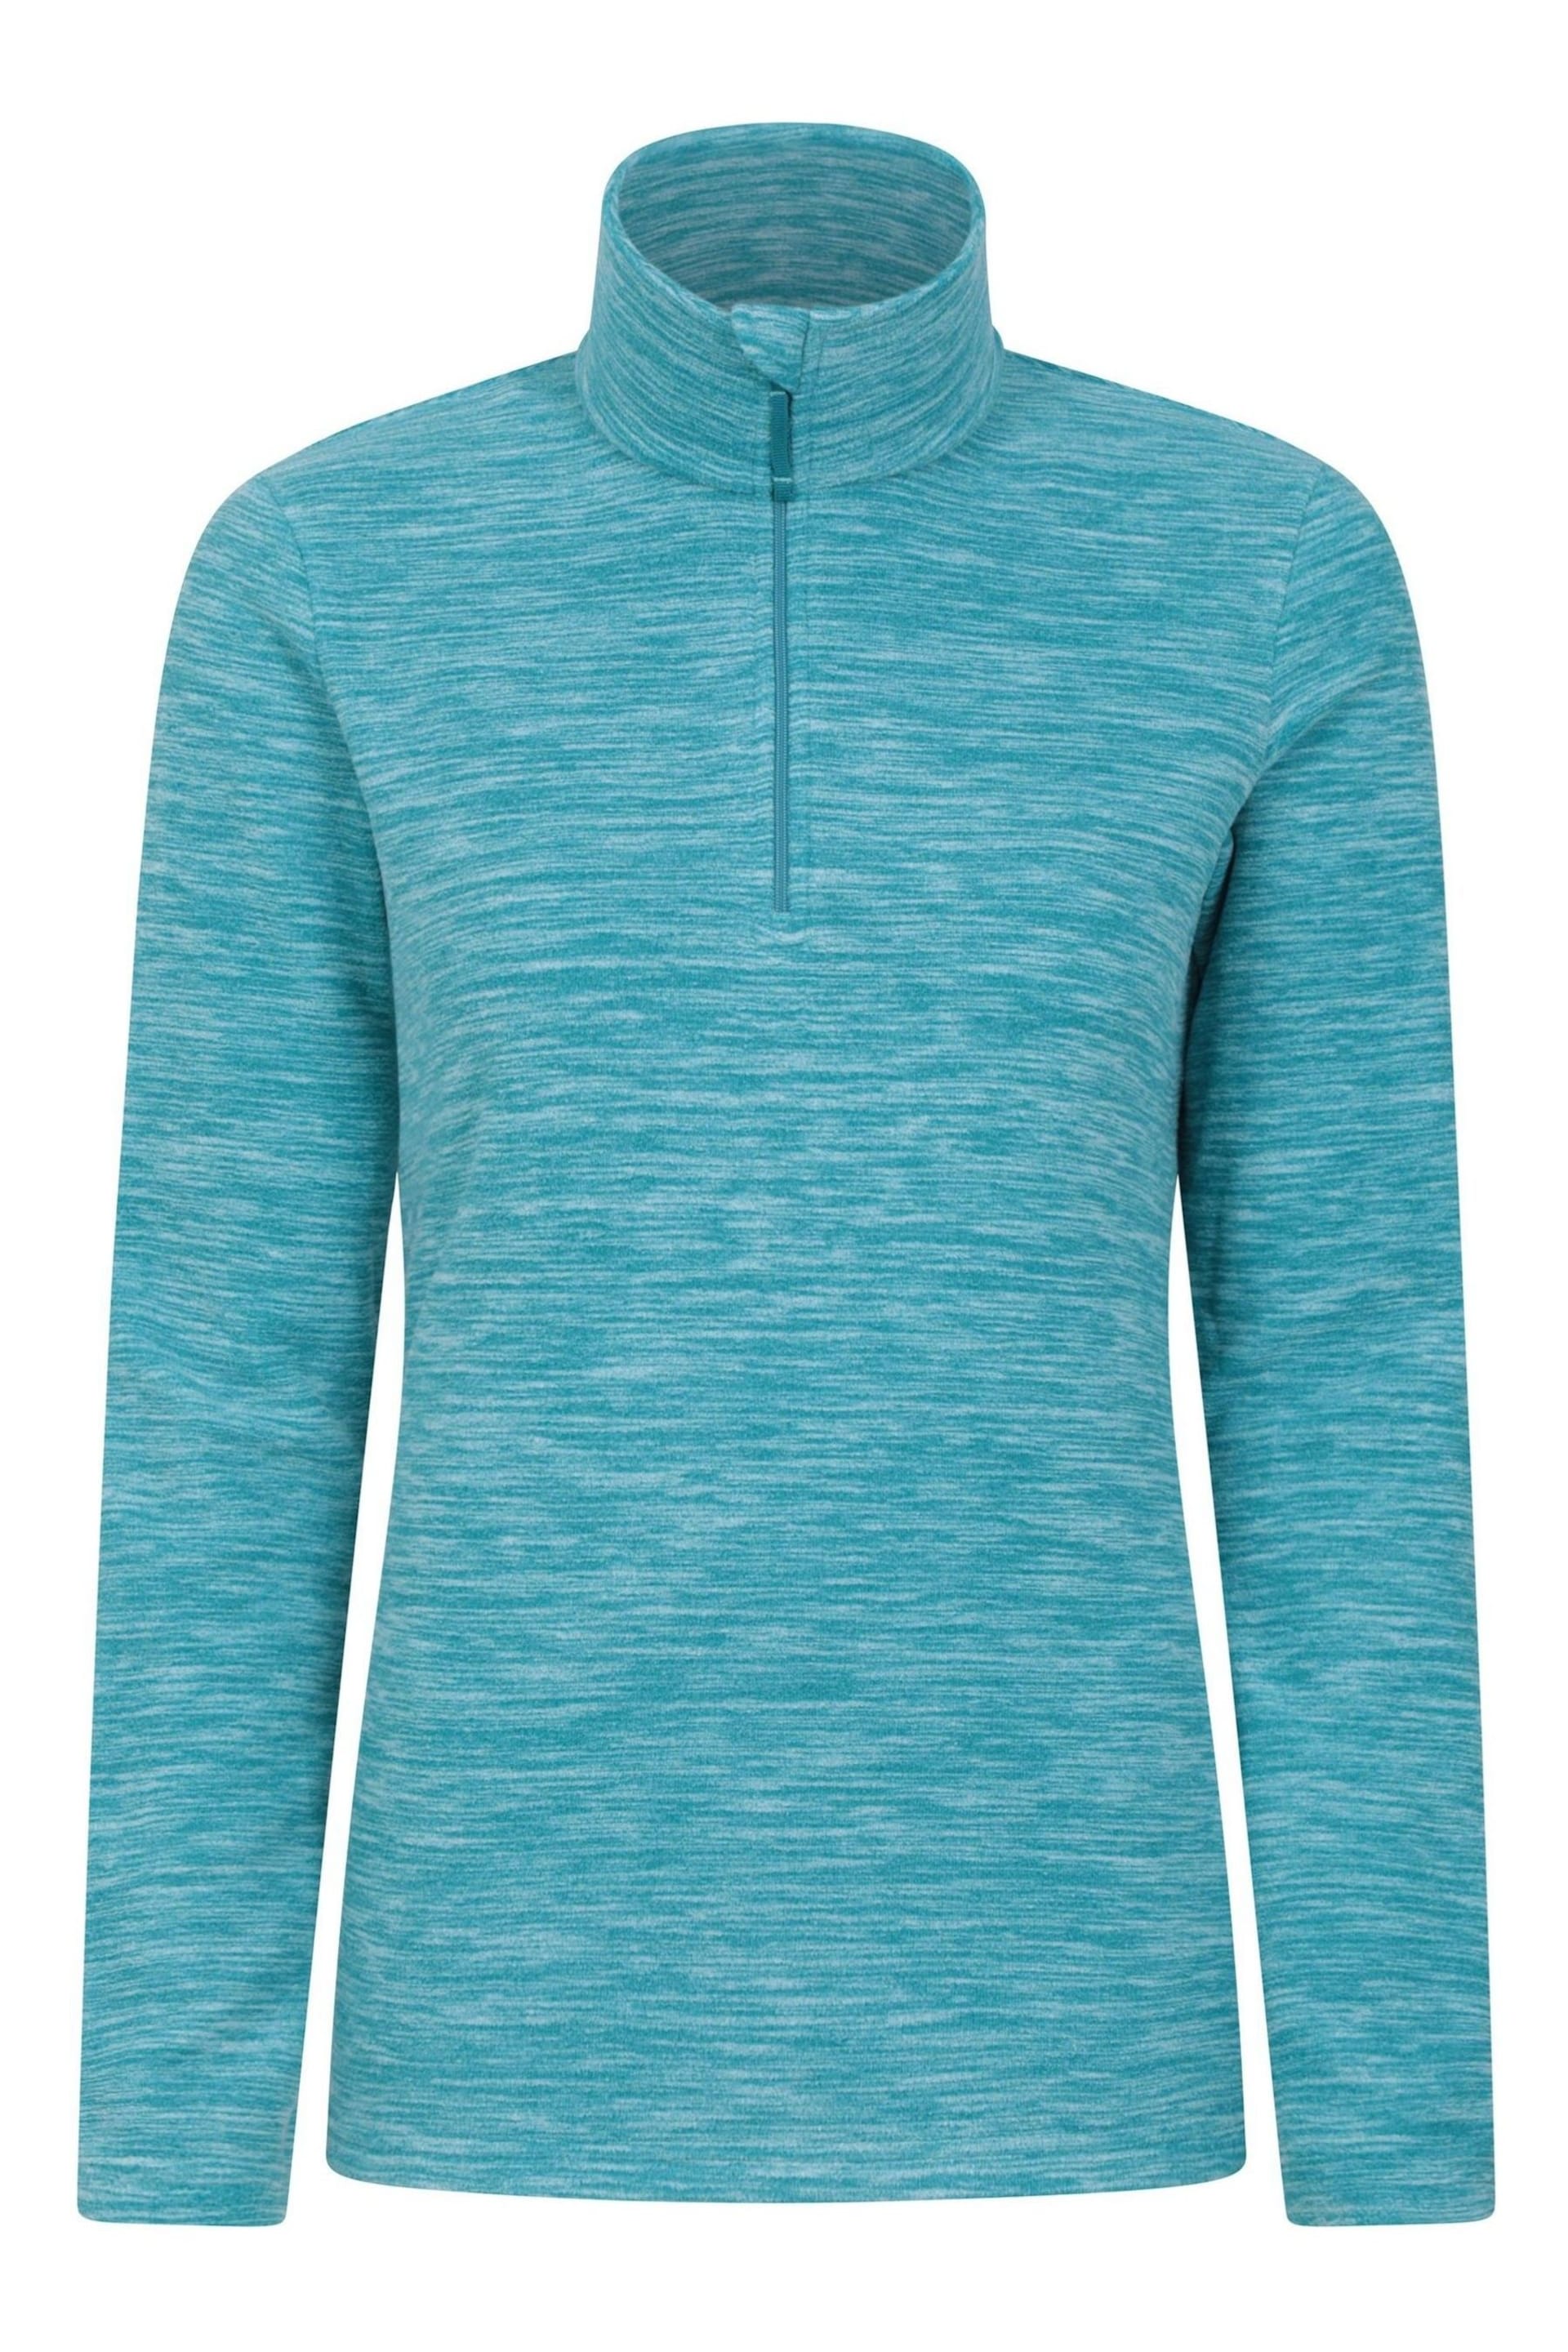 Mountain Warehouse Turquoise Blue Snowdon Melange Womens Half-Zip Fleece - Image 1 of 2